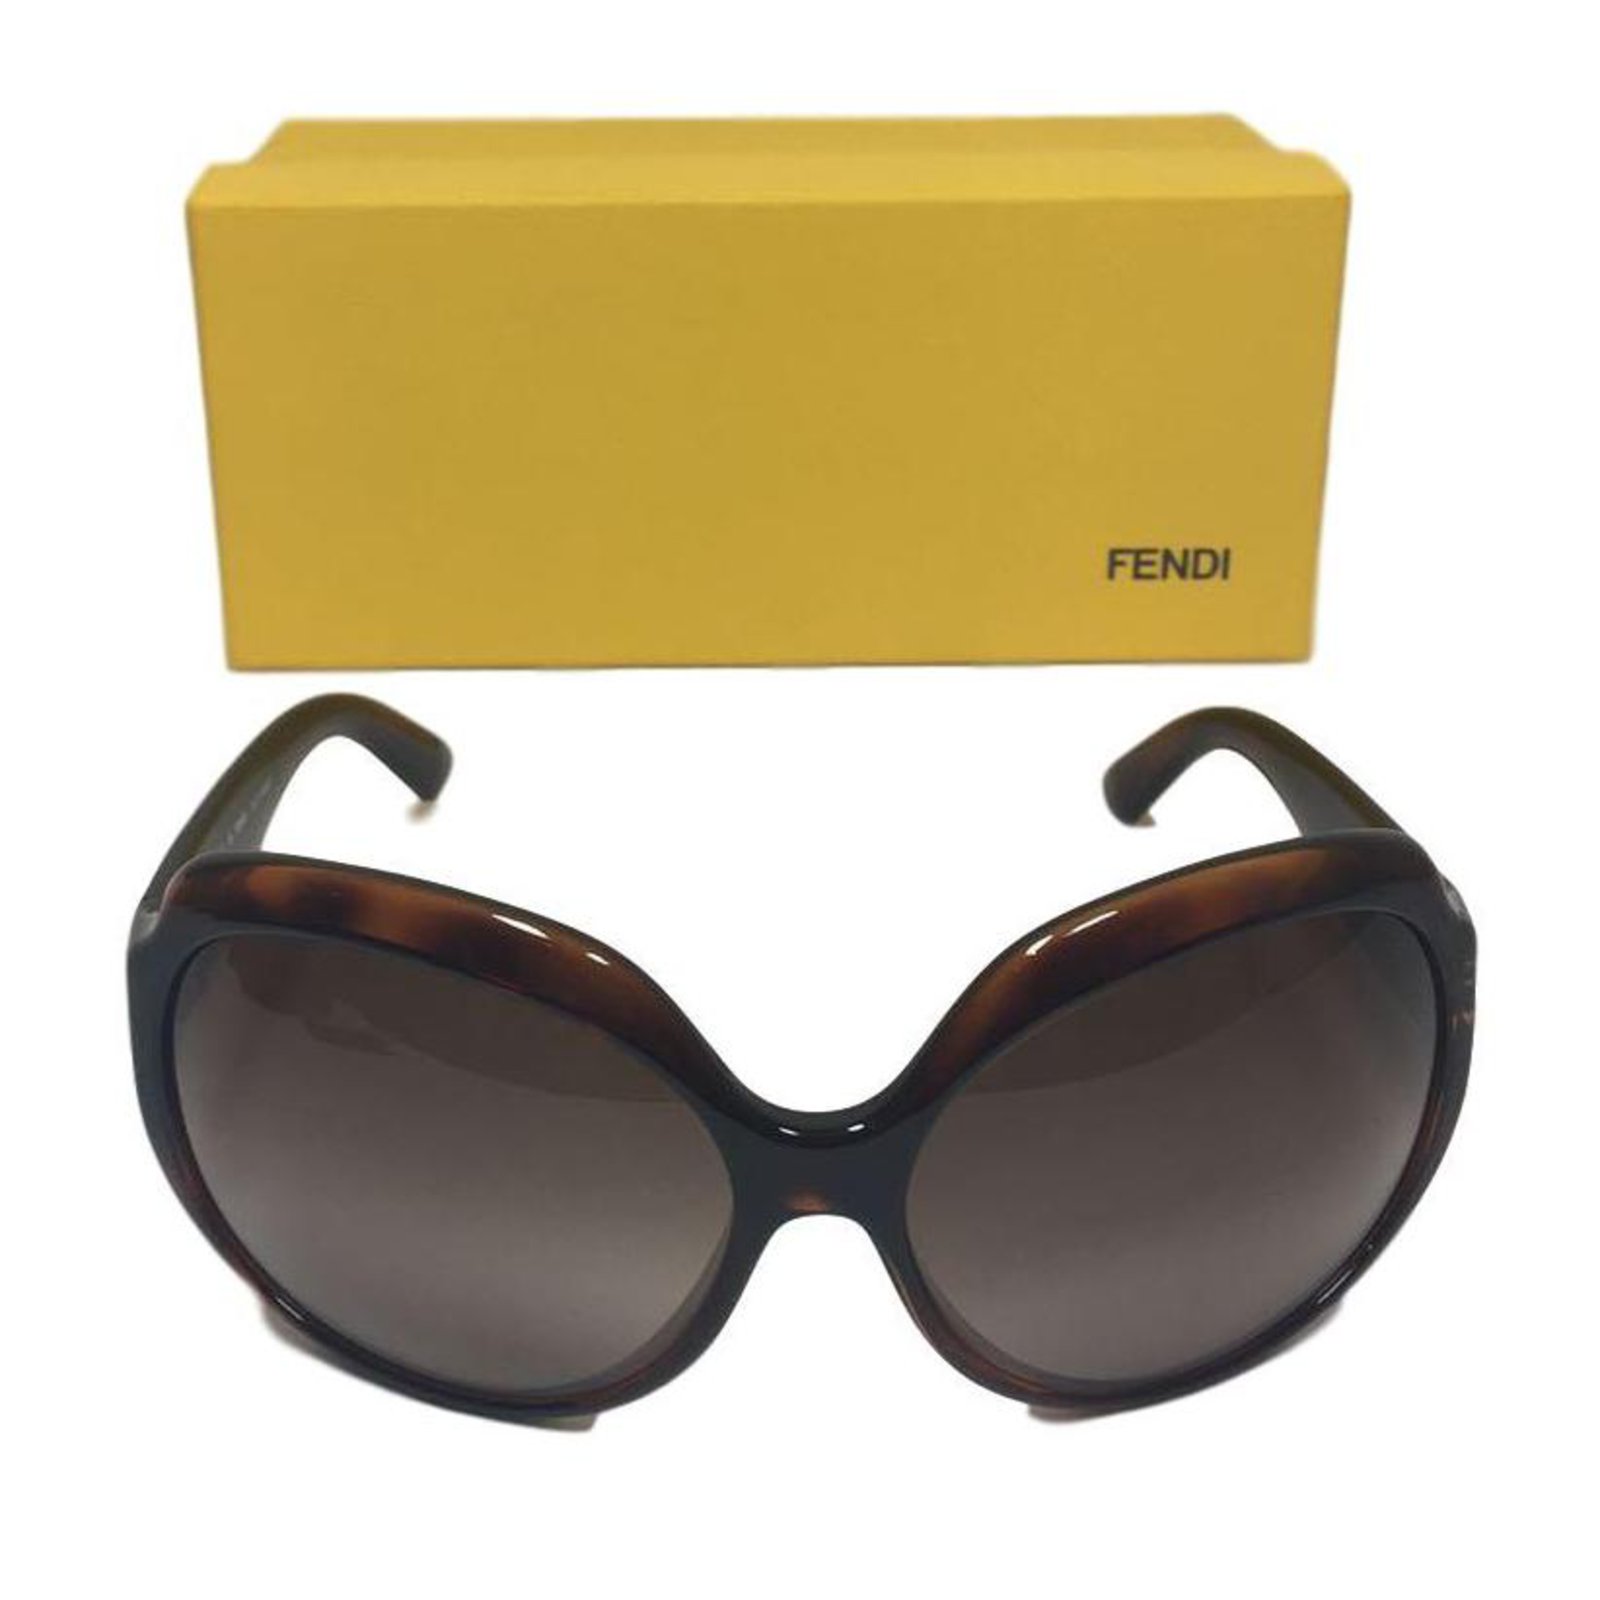 Fendi Sunglasses Sunglasses Other Brown 